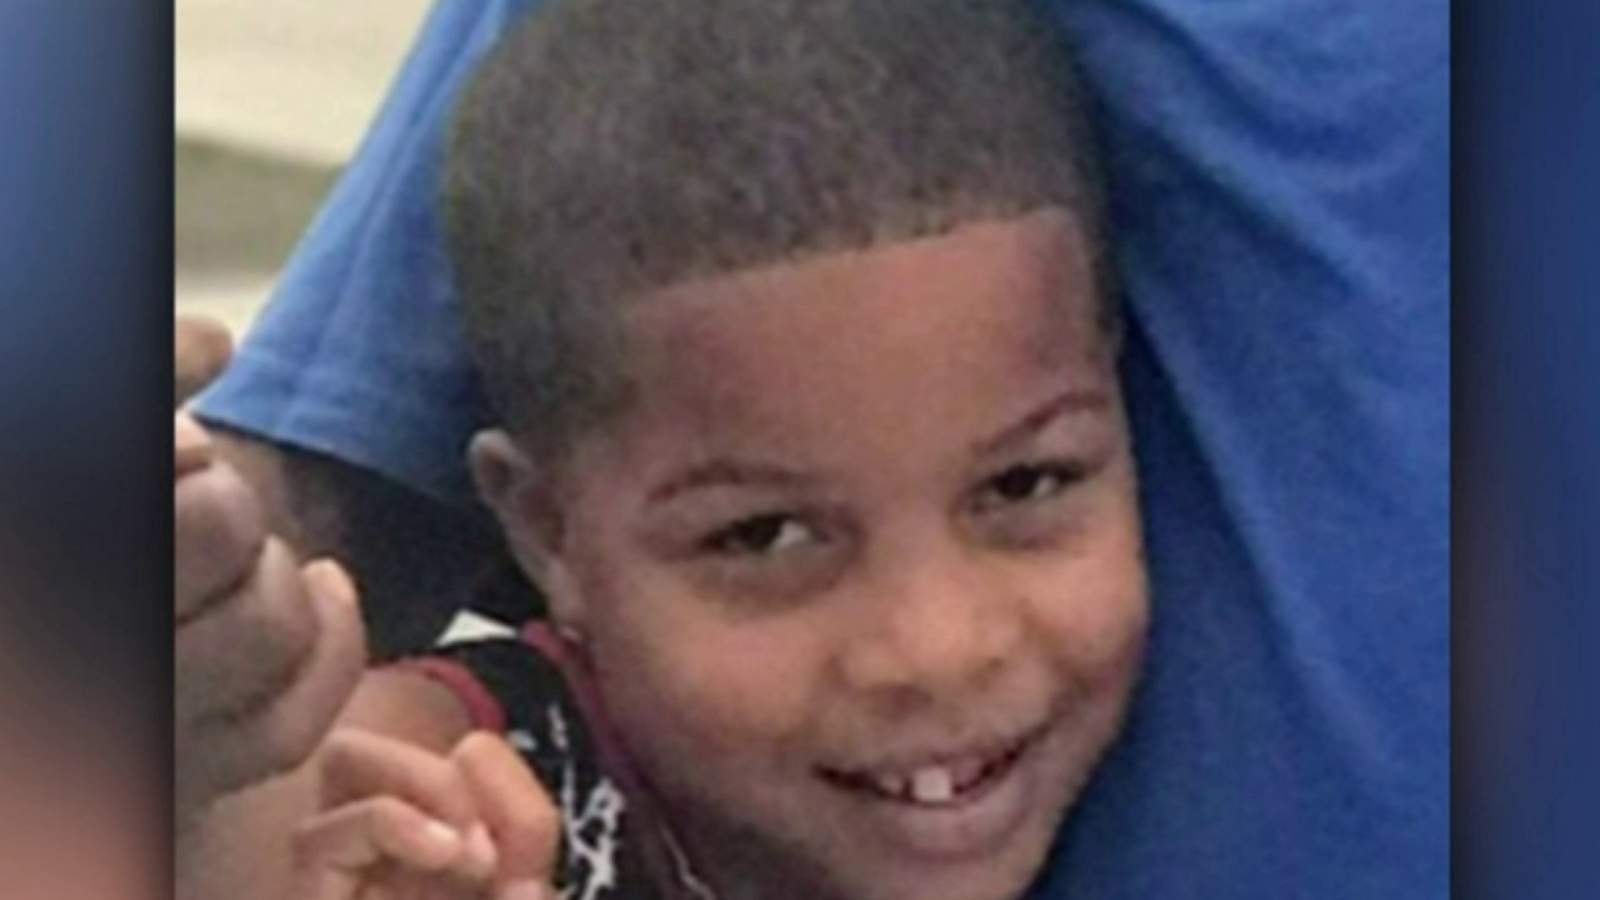 12-year-old boy killed in Oak Park shooting